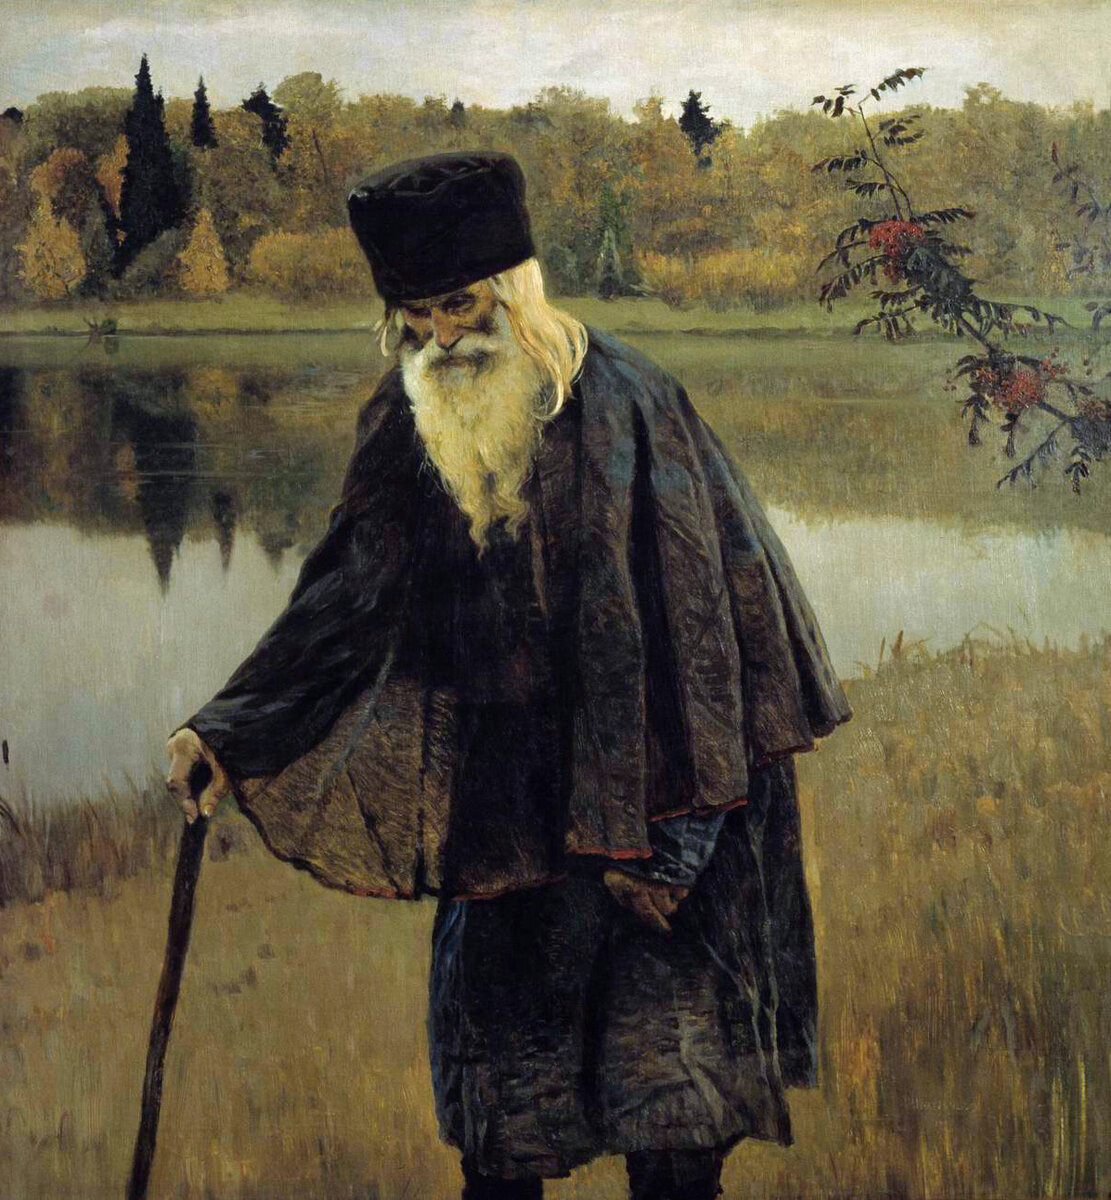 Картина Михаила Нестерова "Пустынник".  А схимонах Феодор (Сутормин) 1834-1923.